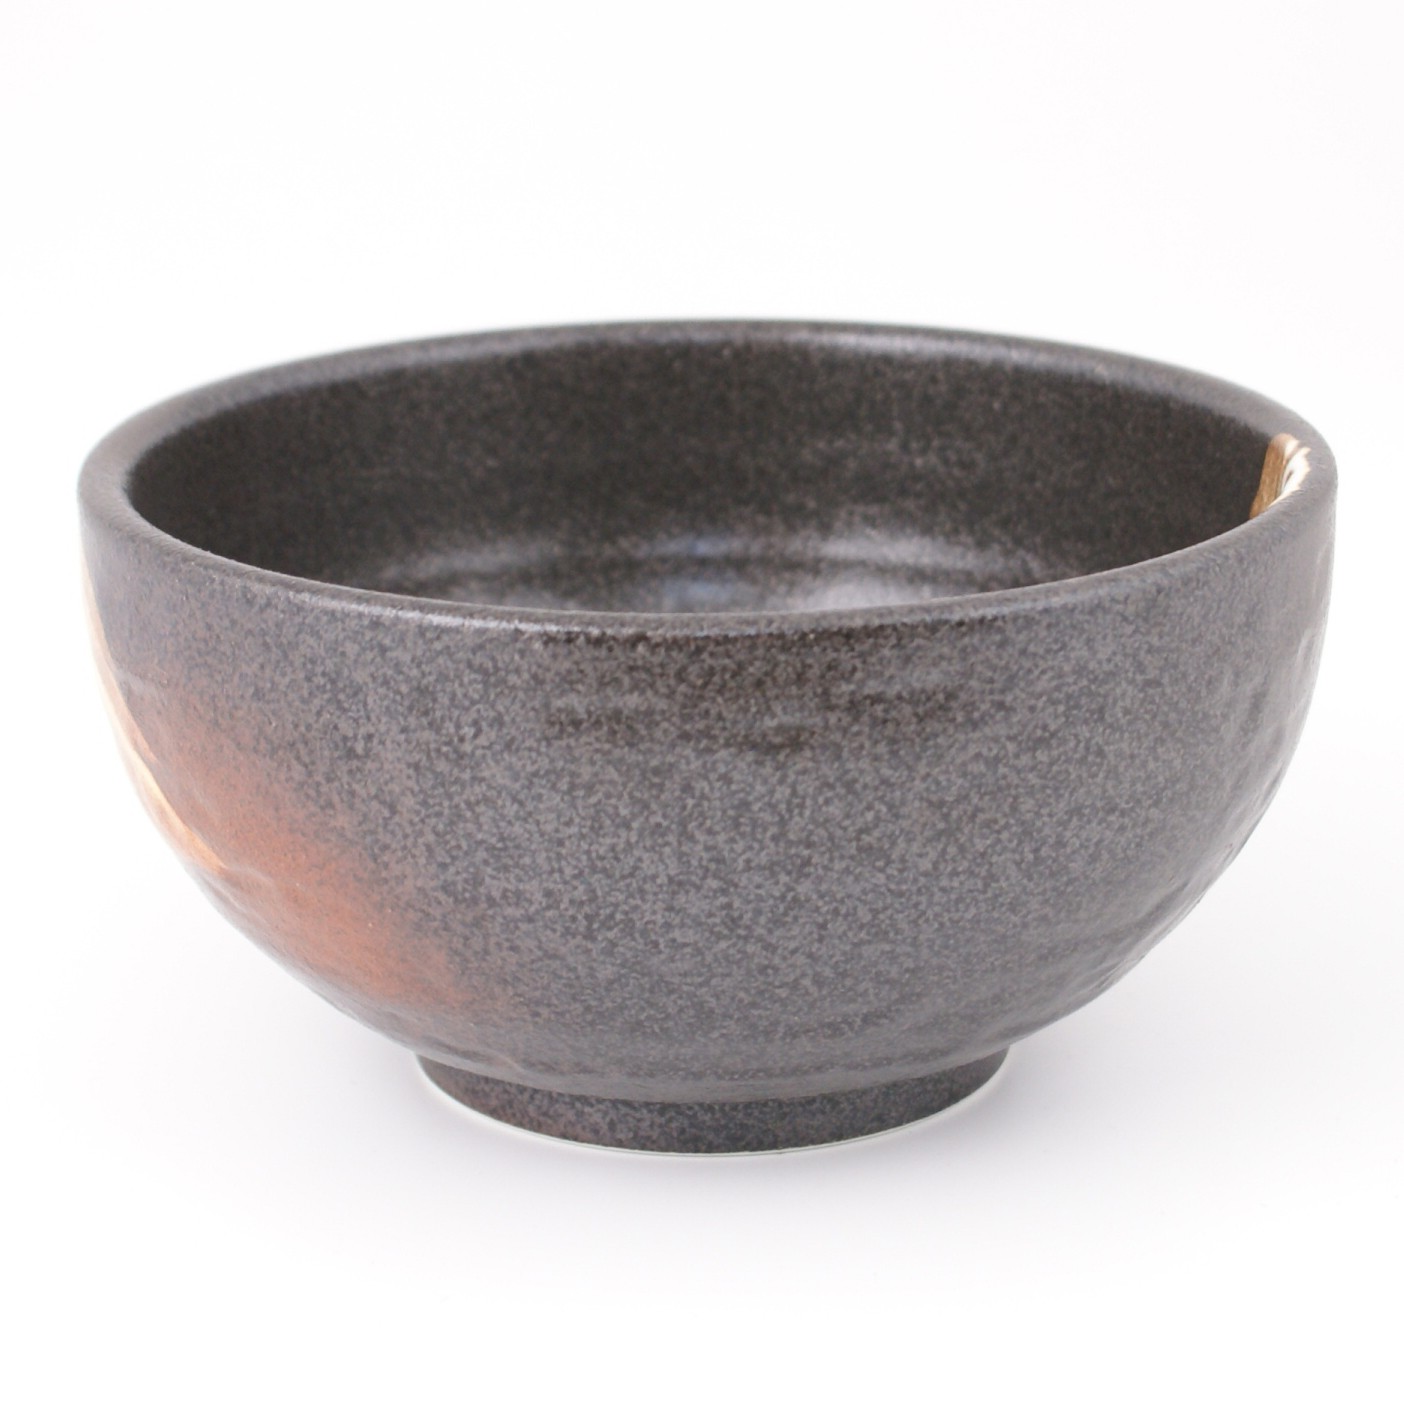 https://kyotoboutique.fr/1670/ciotola-giapponese-di-ceramica-per-zuppa-51556034.jpg